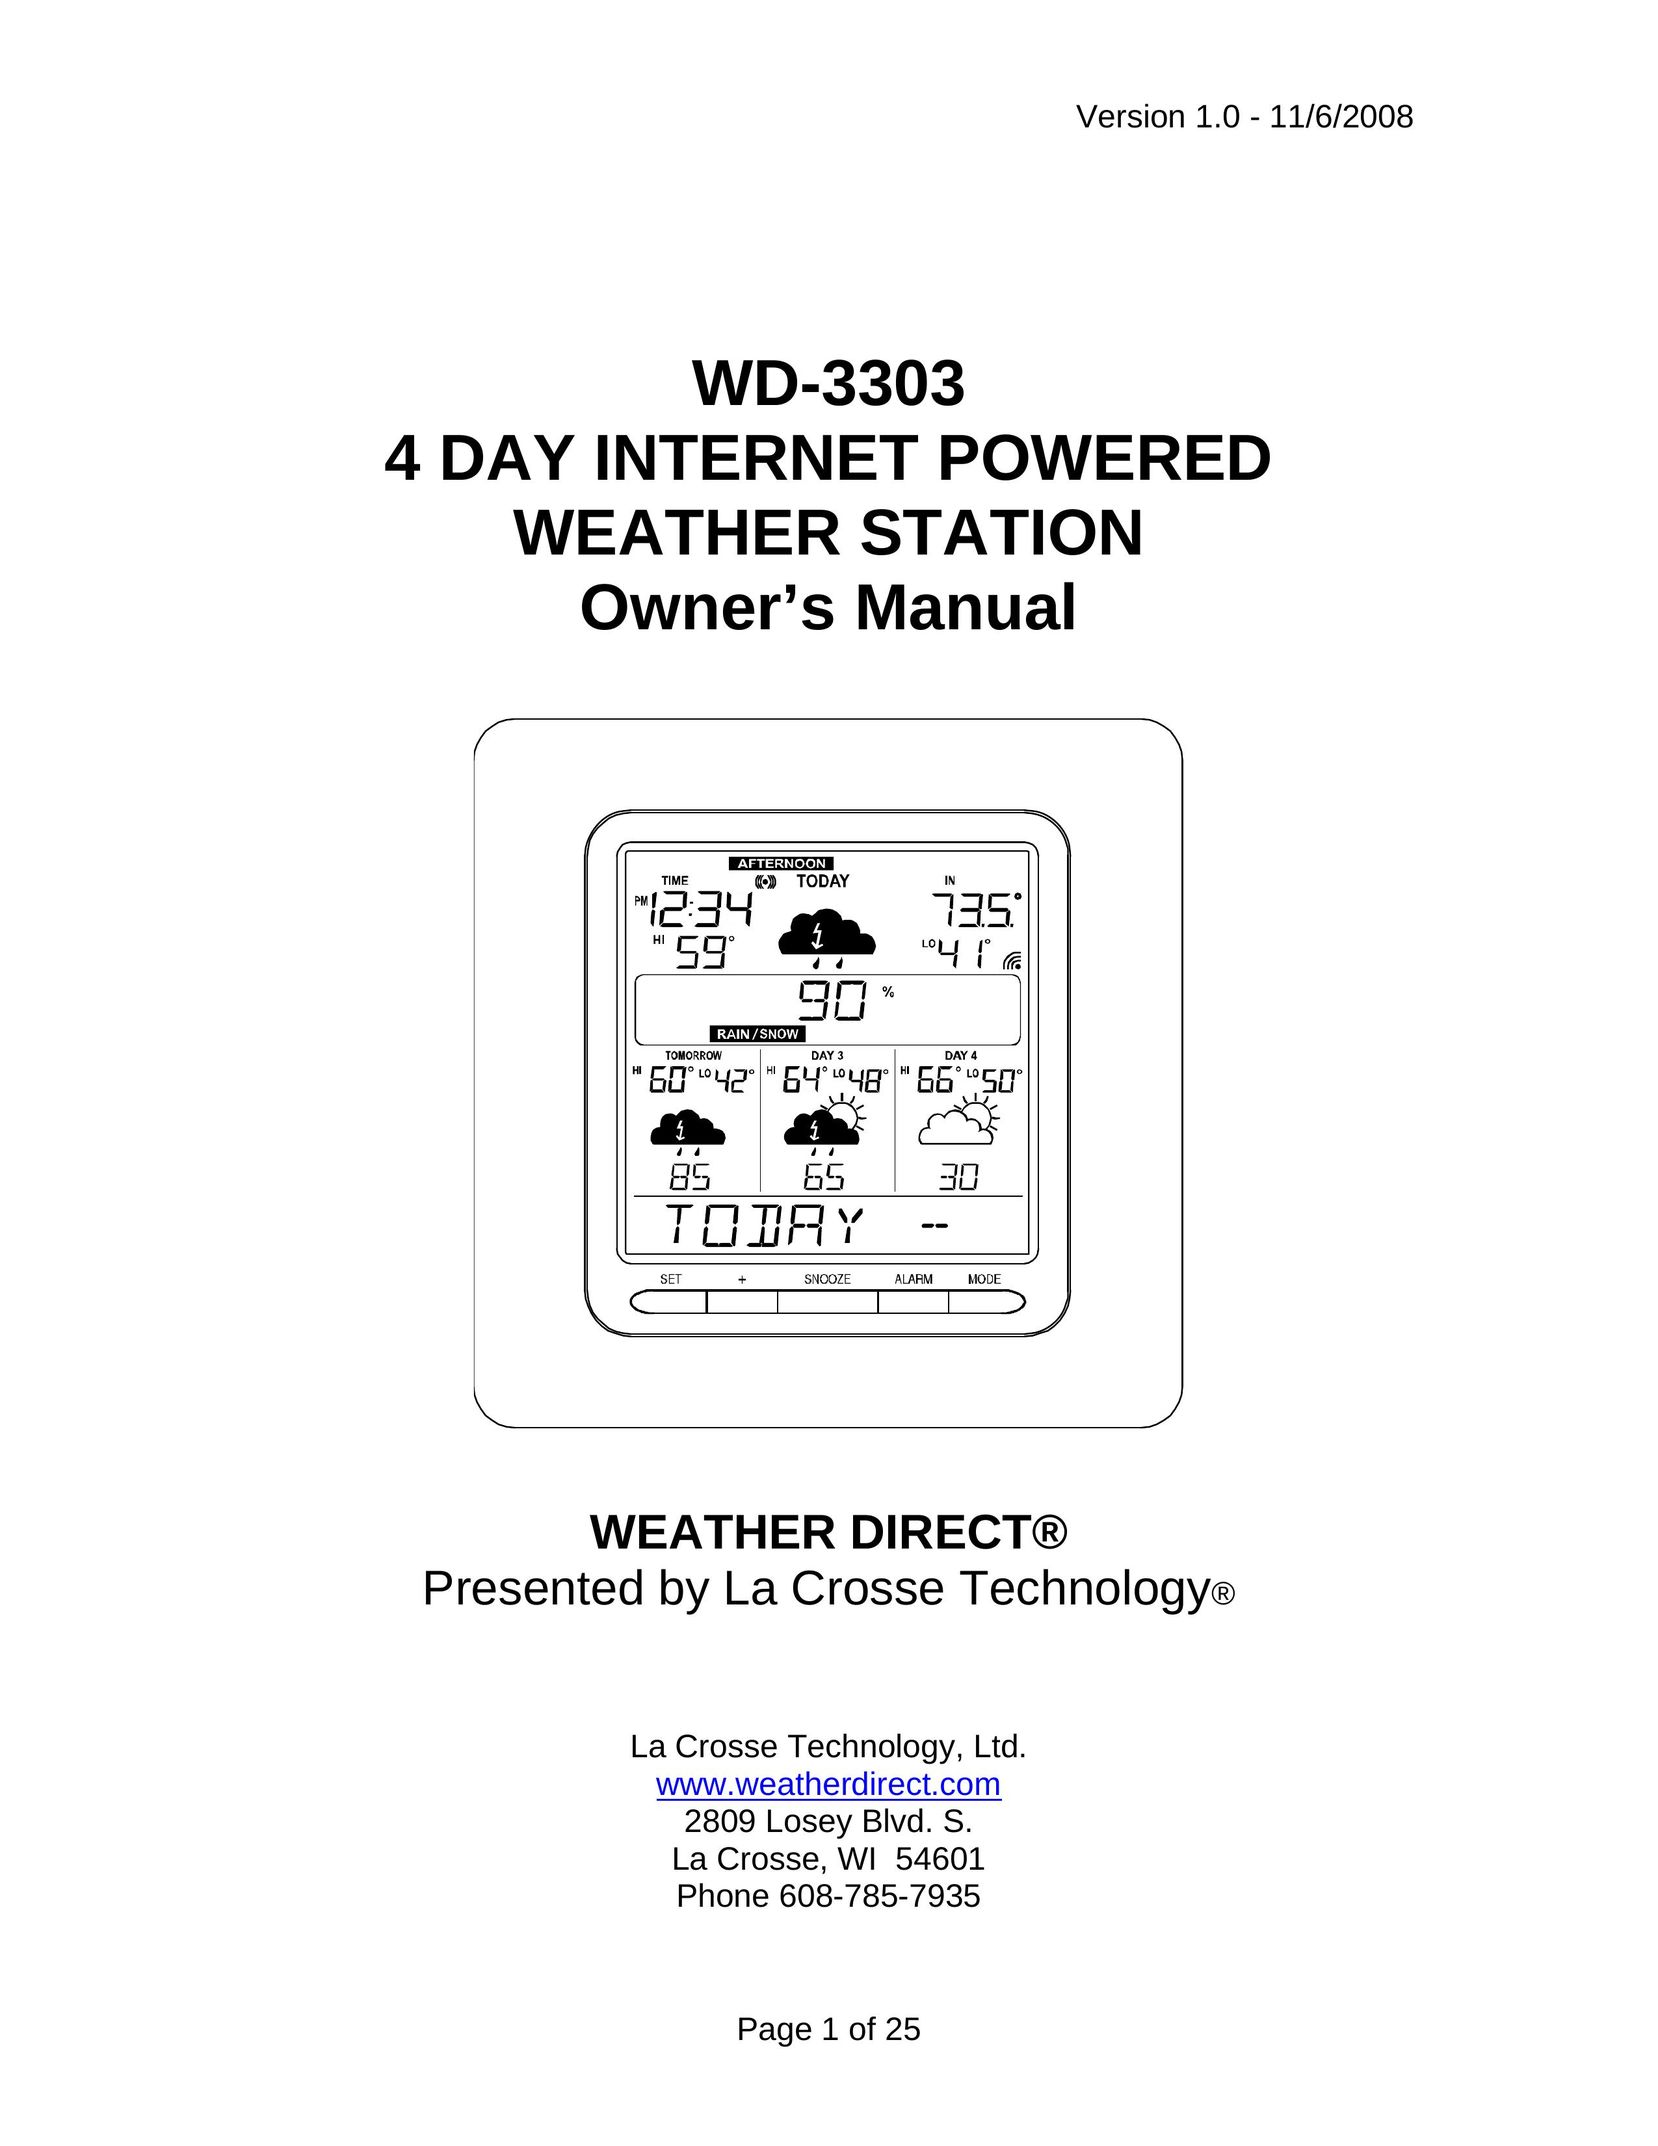 La Crosse Technology WD-3303 Portable Radio User Manual